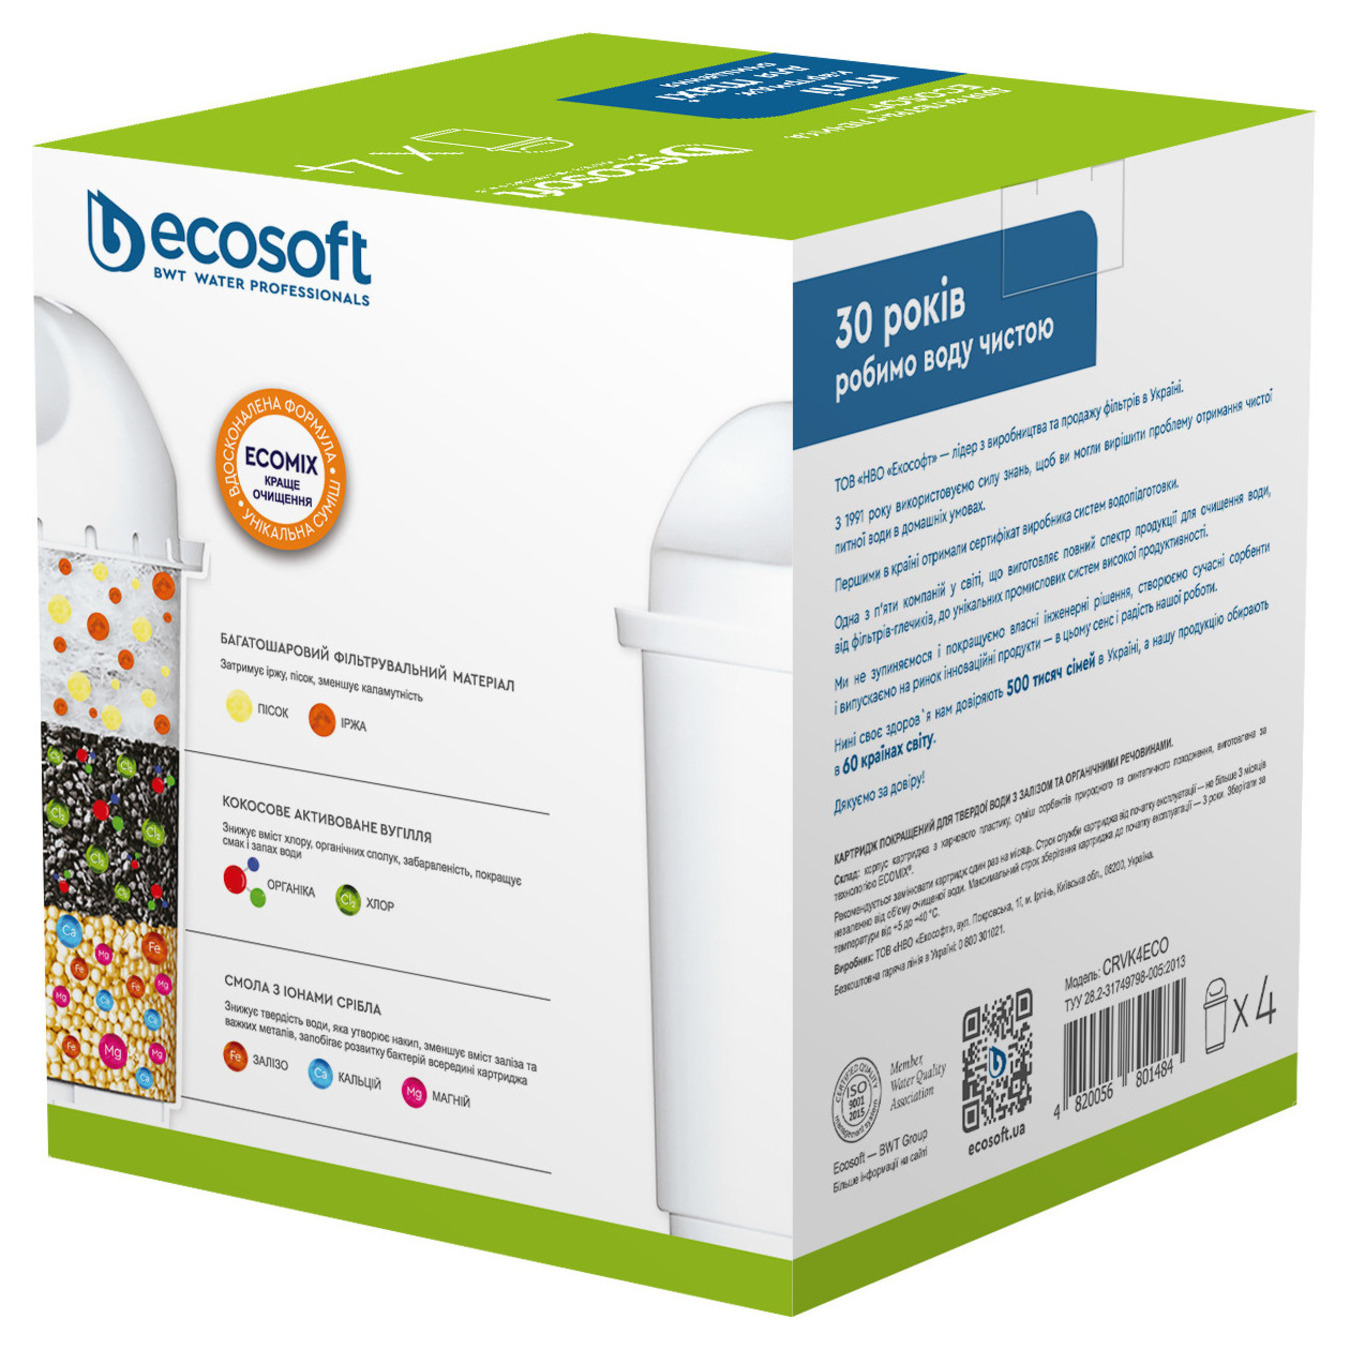 A set of Ecosoft cartridges improved 3+1